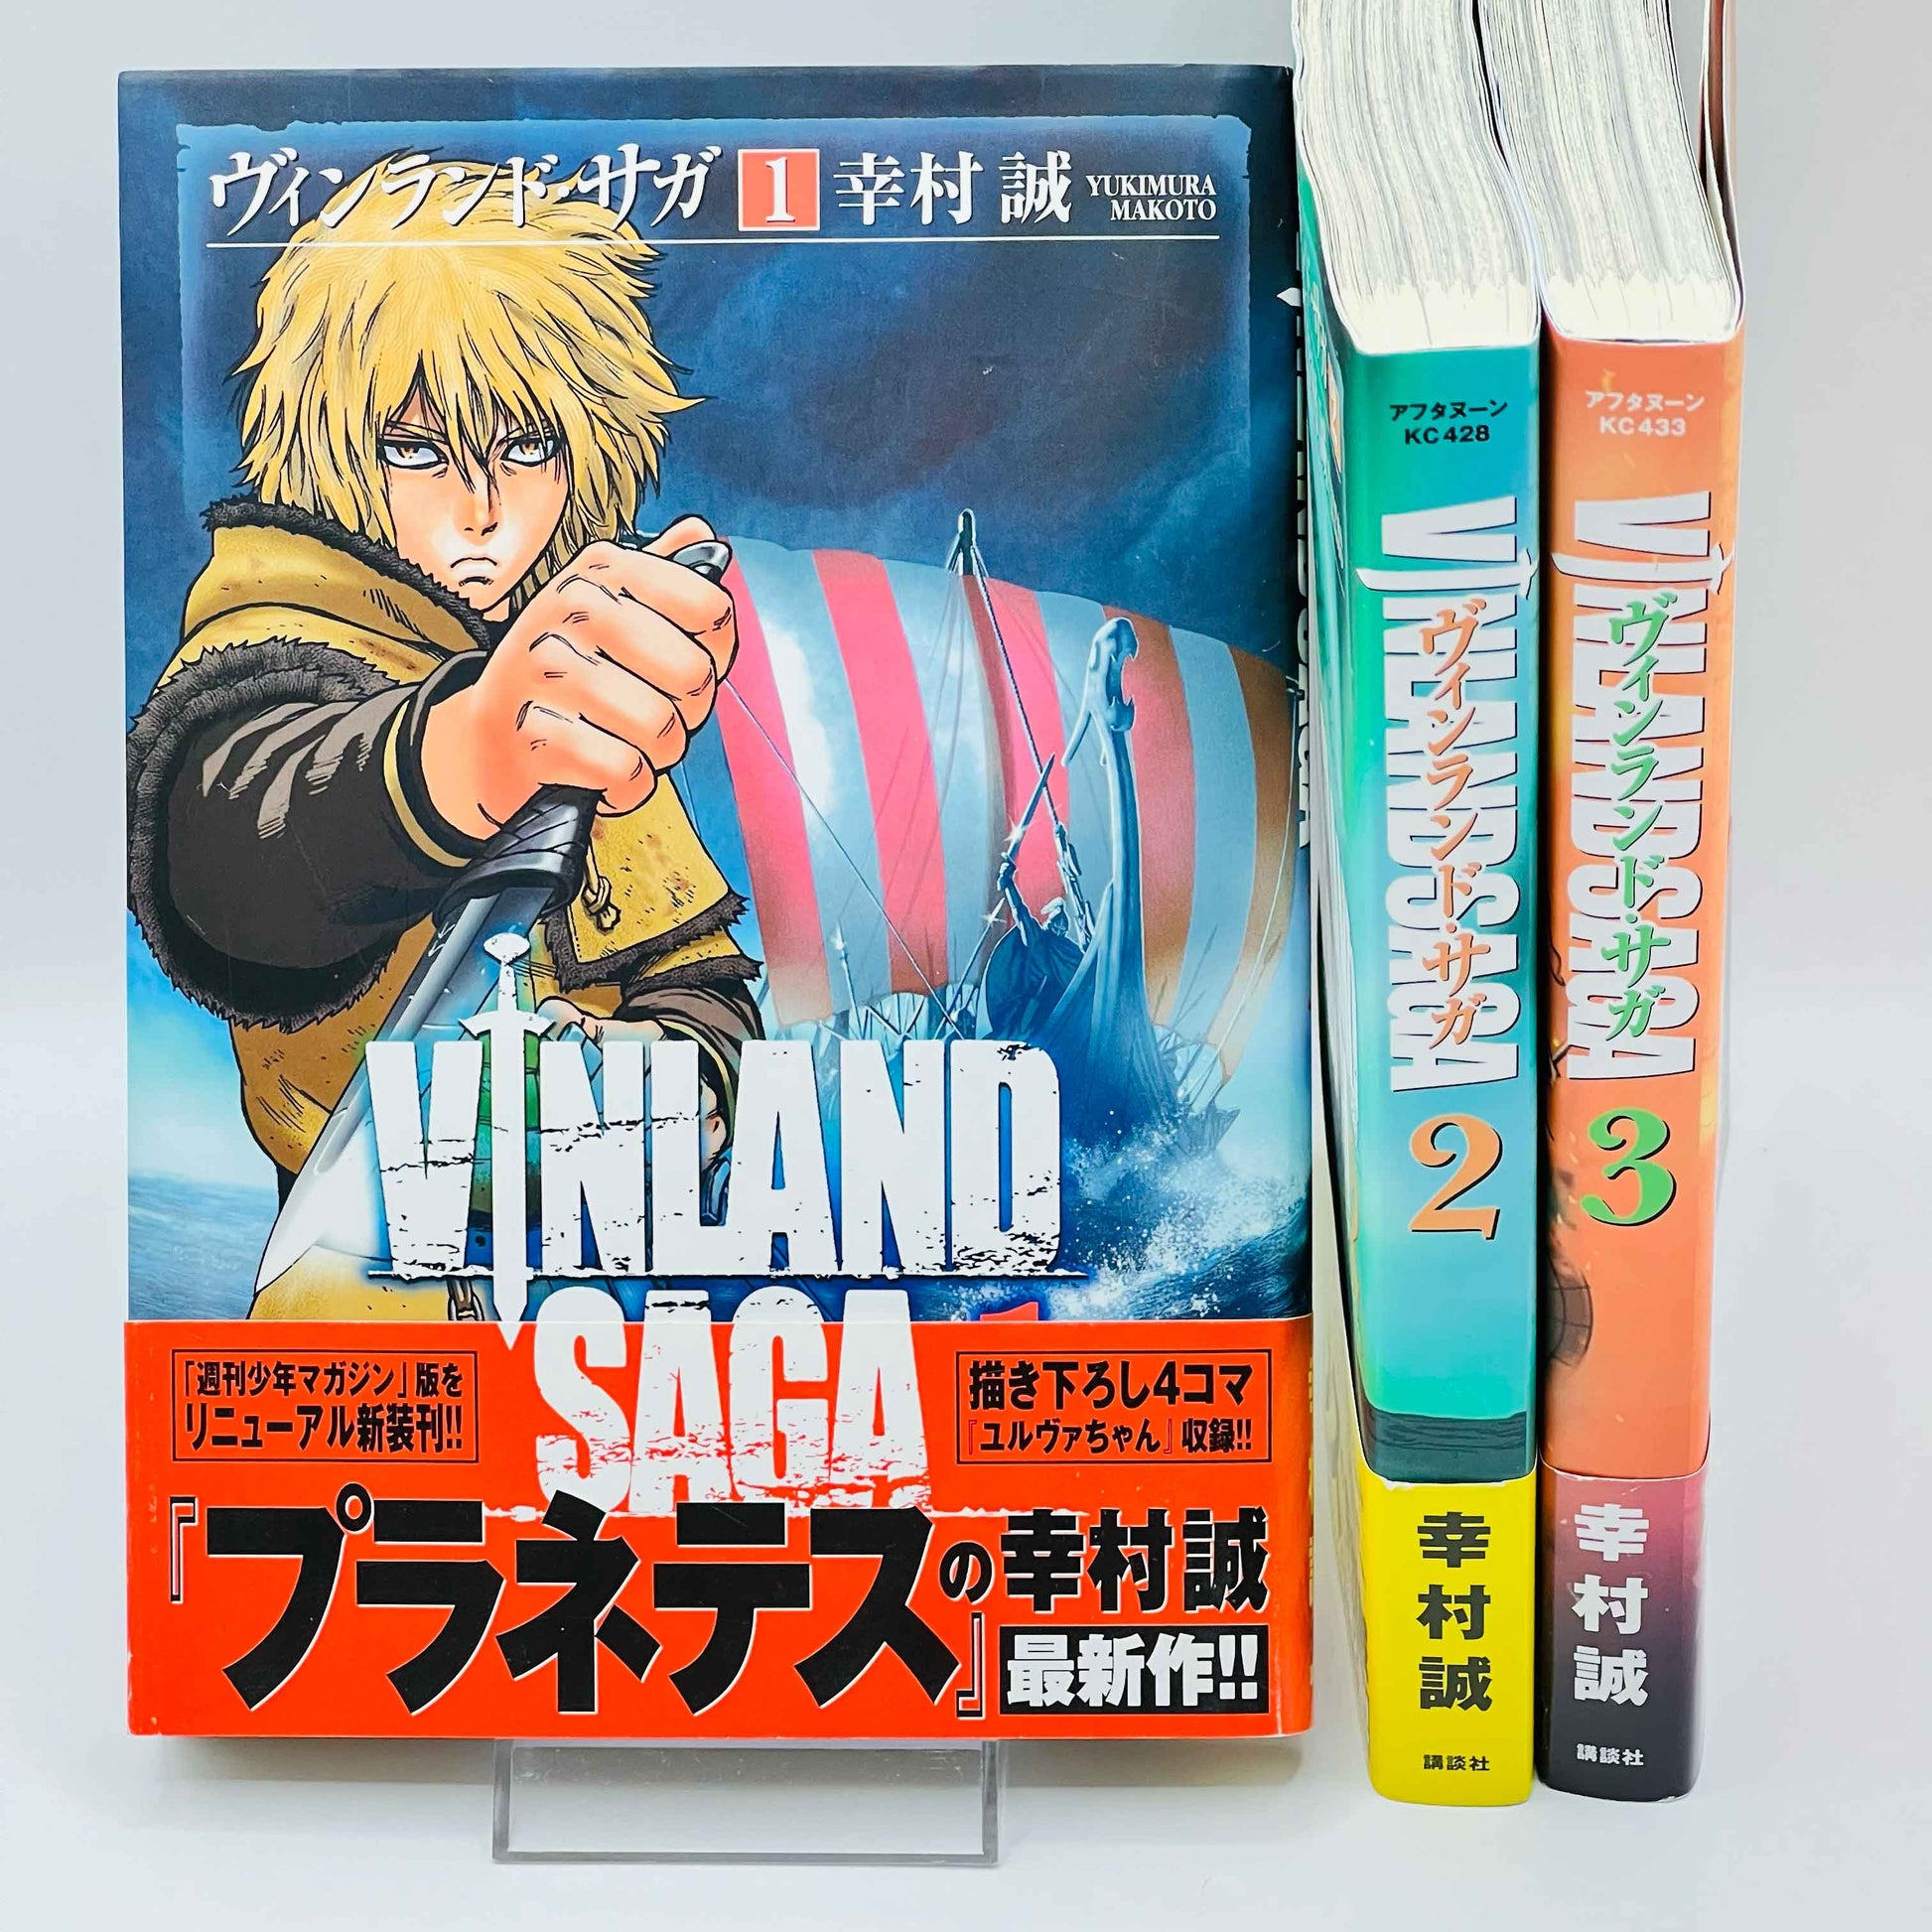 「Wish - Reserved」Vinland Saga - Volume 01 02 03 /w Obi - 1stPrint.net - 1st First Print Edition Manga Store - M-VINL-LOT-001